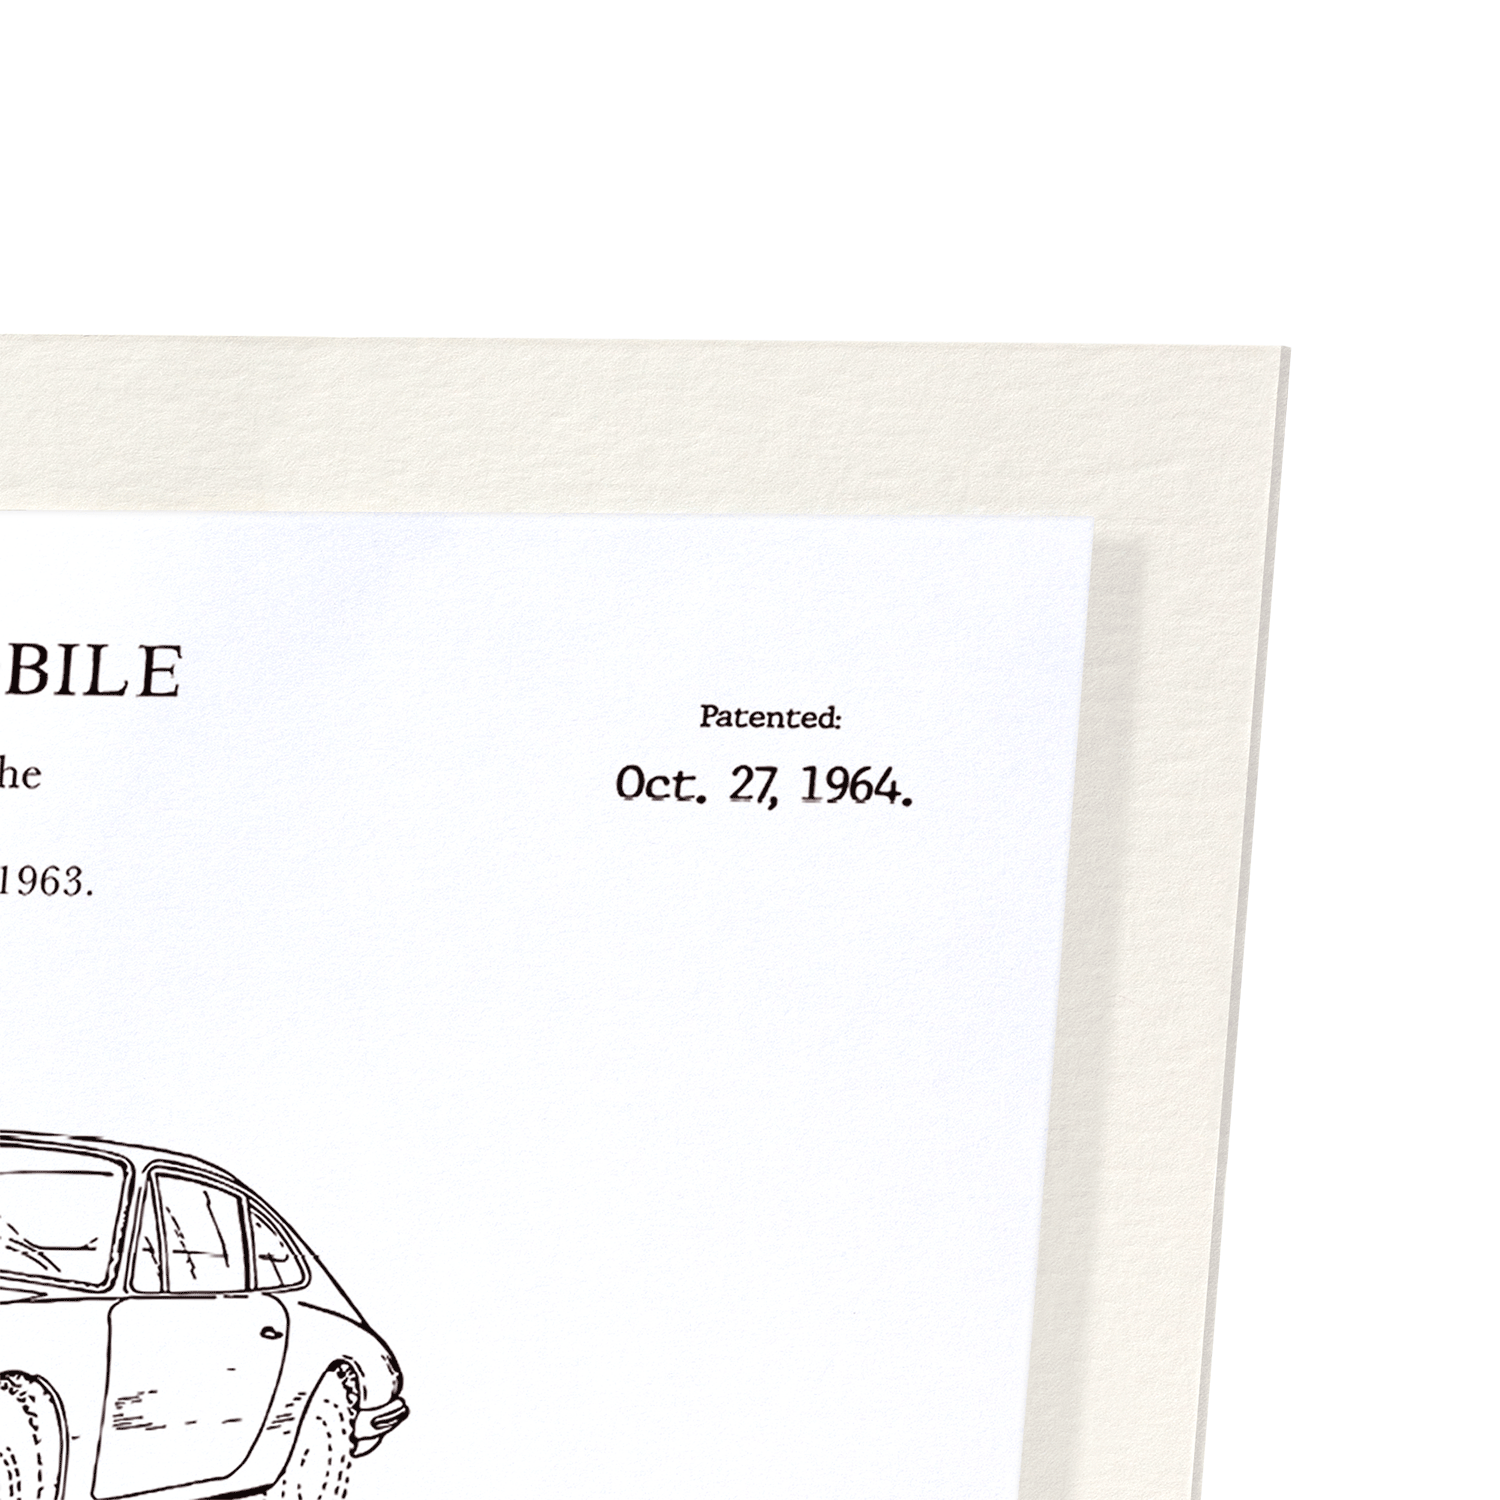 PATENT OF AUTOMOBILE (1964): Patent Art Print